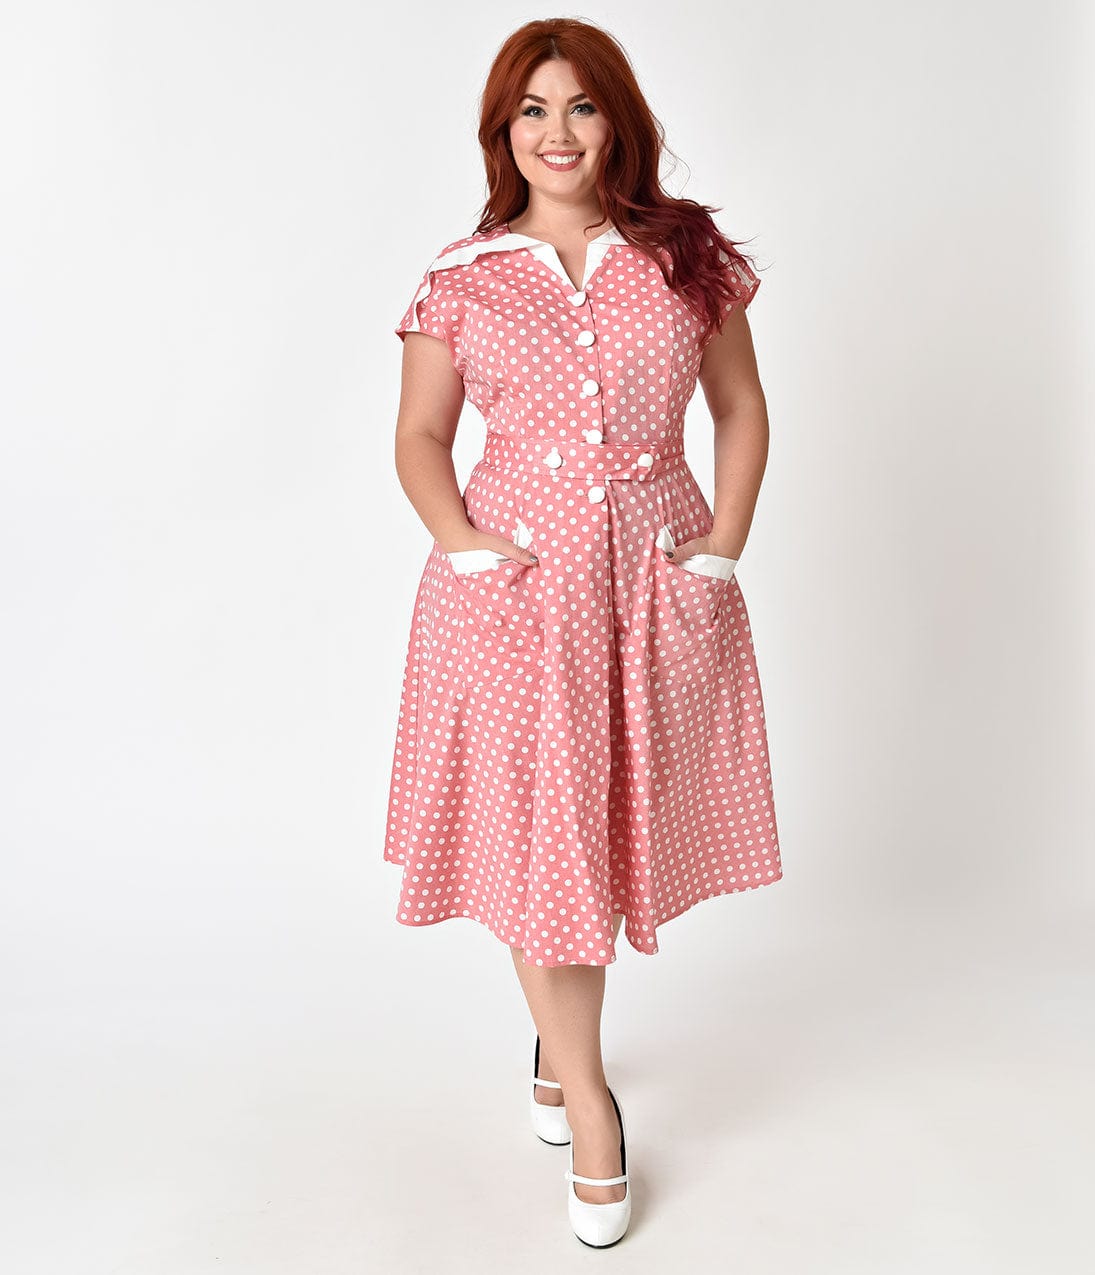 Plus Size Polka Dot Dresses - Vintage 40s, 50s, 60s, 70s Dresses